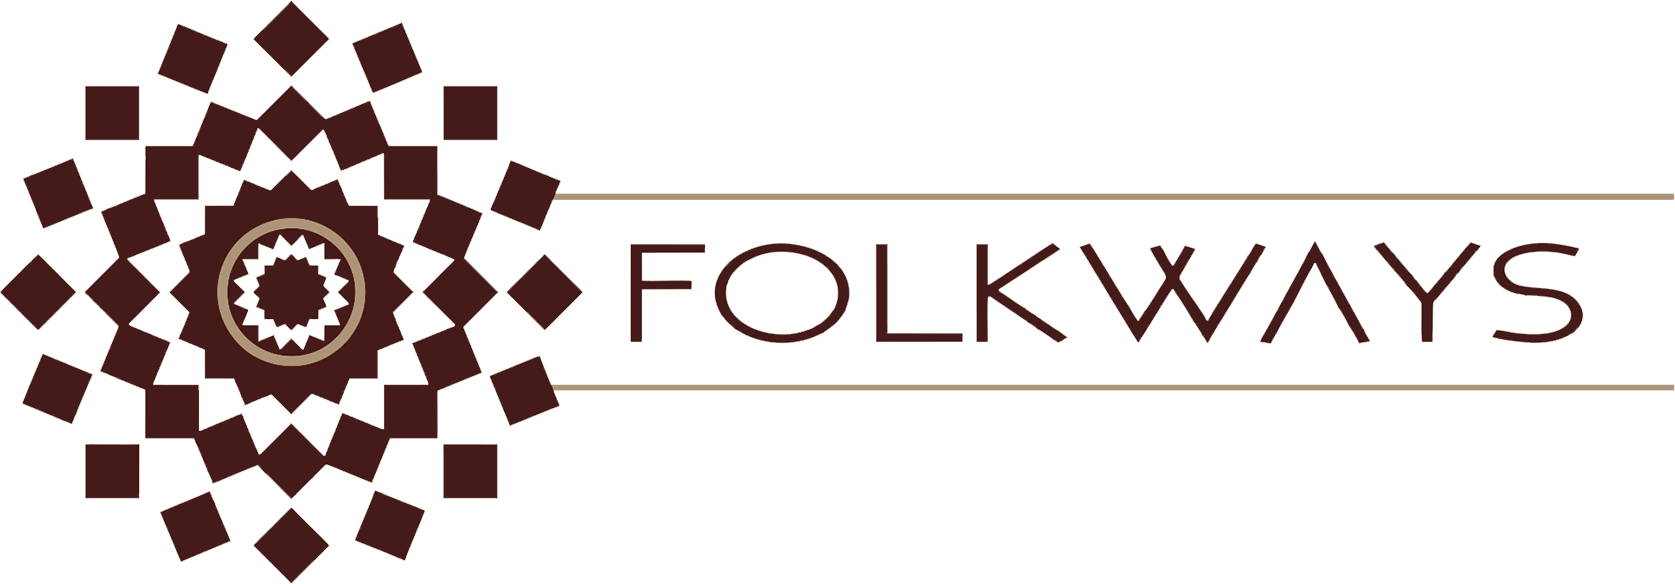 folkways logo 2